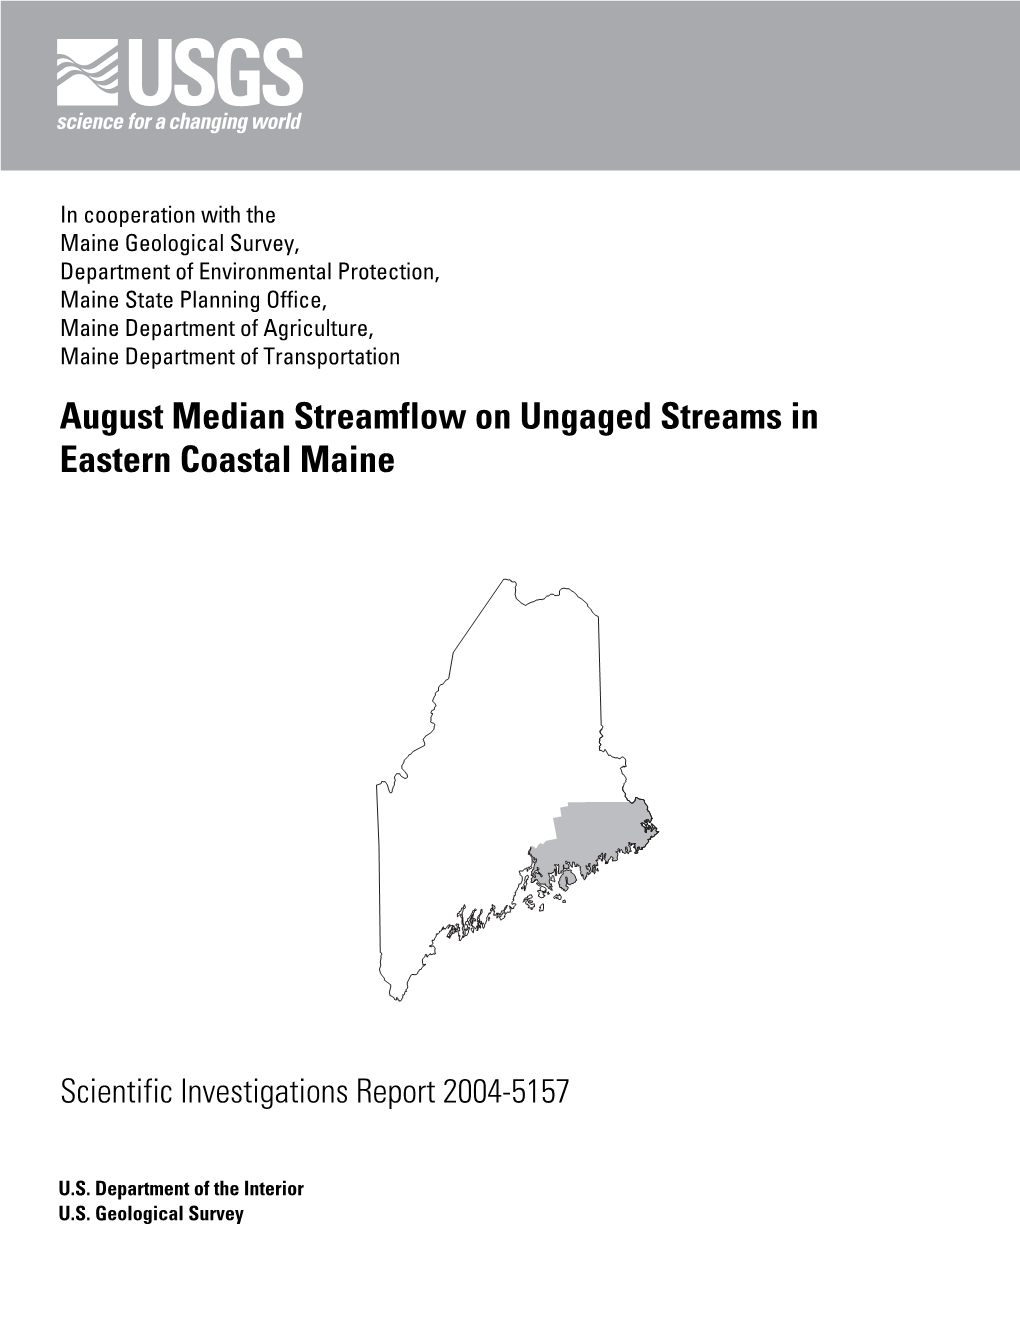 August Median Streamflow on Ungaged Streams in Eastern Coastal Maine